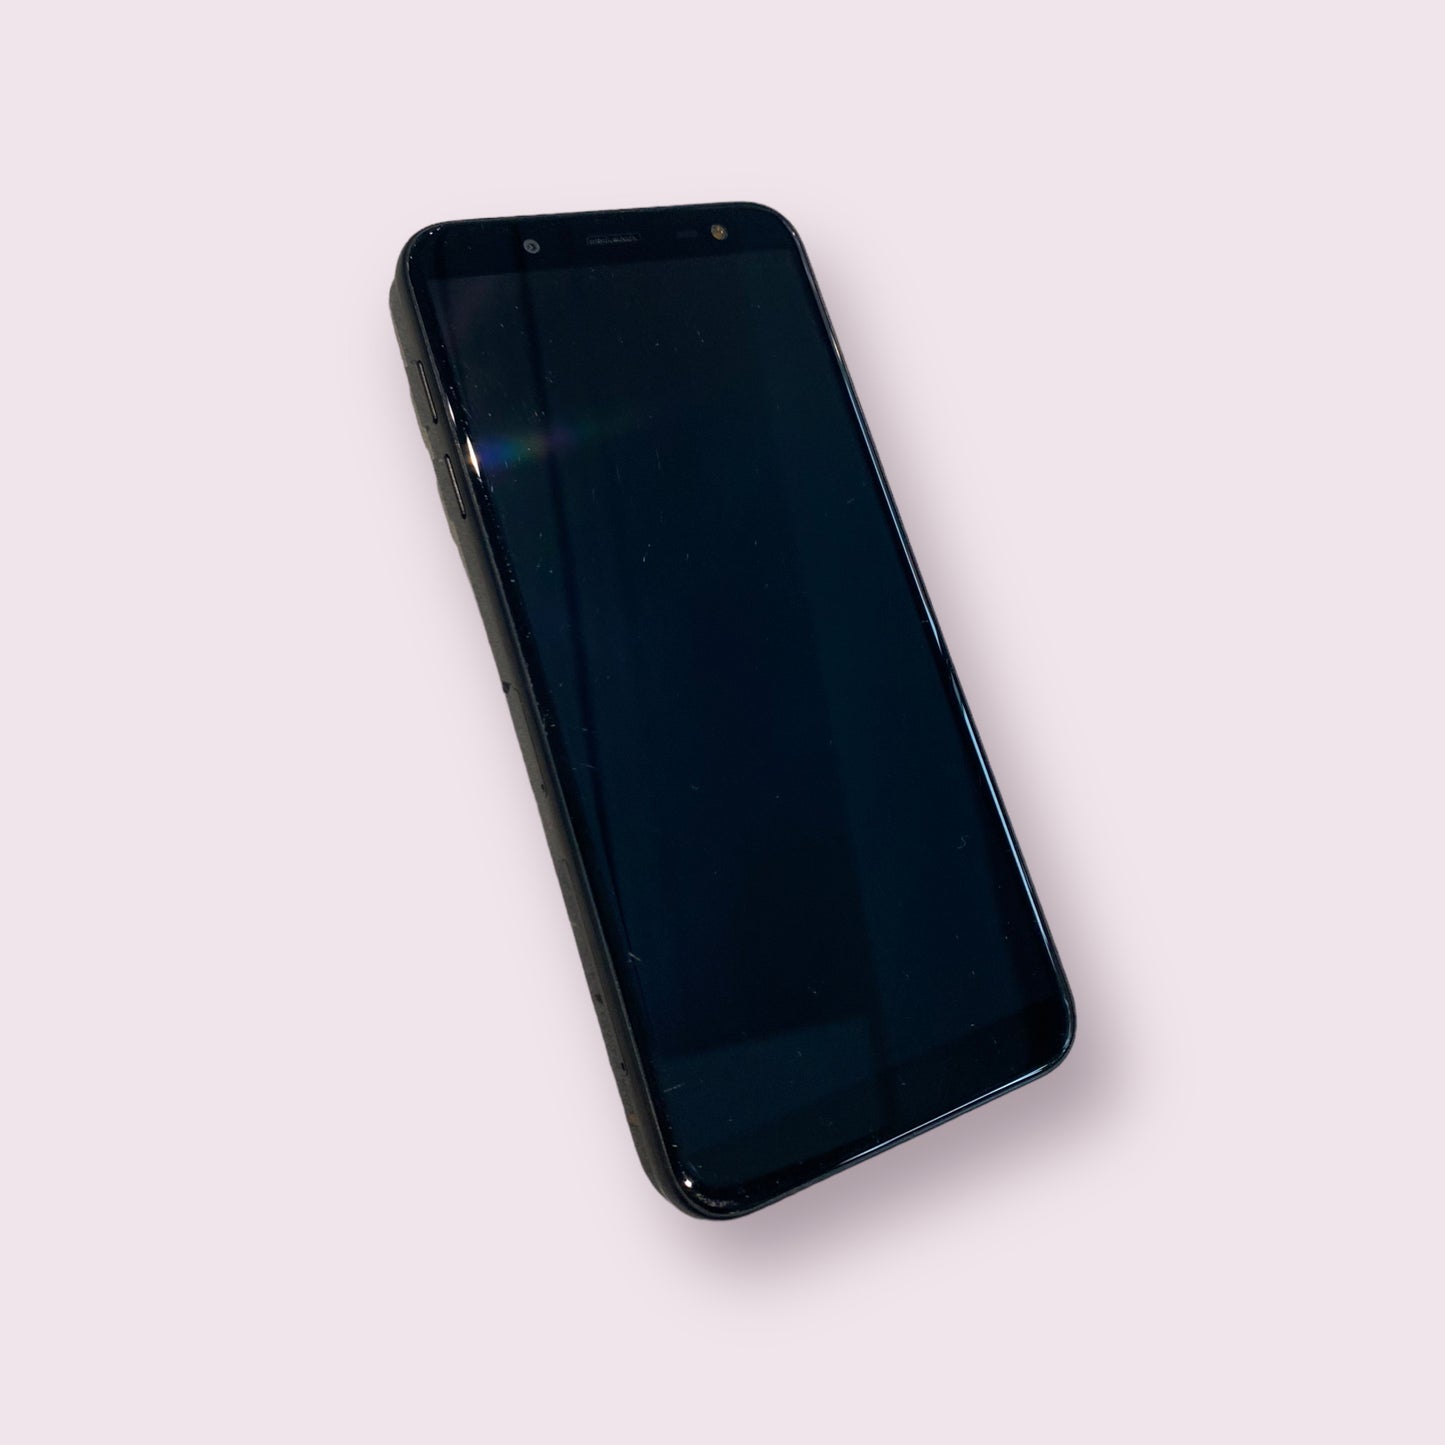 Samsung Galaxy J6 2018 SM-J600F 32GB black smartphone - Unlocked - Grade B